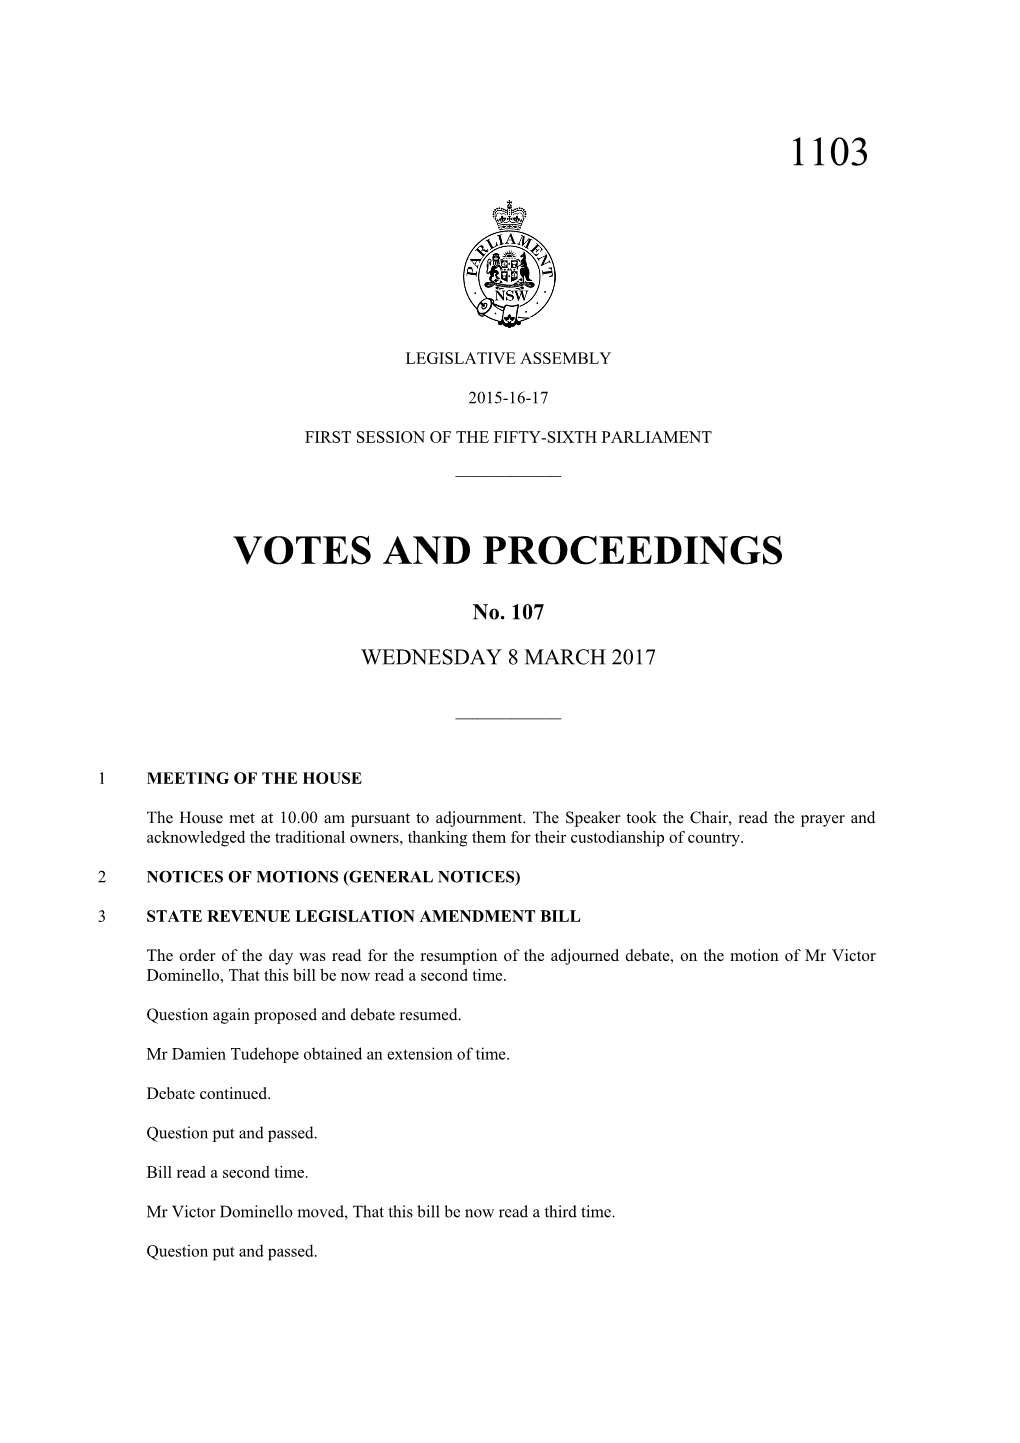 1103 Votes and Proceedings